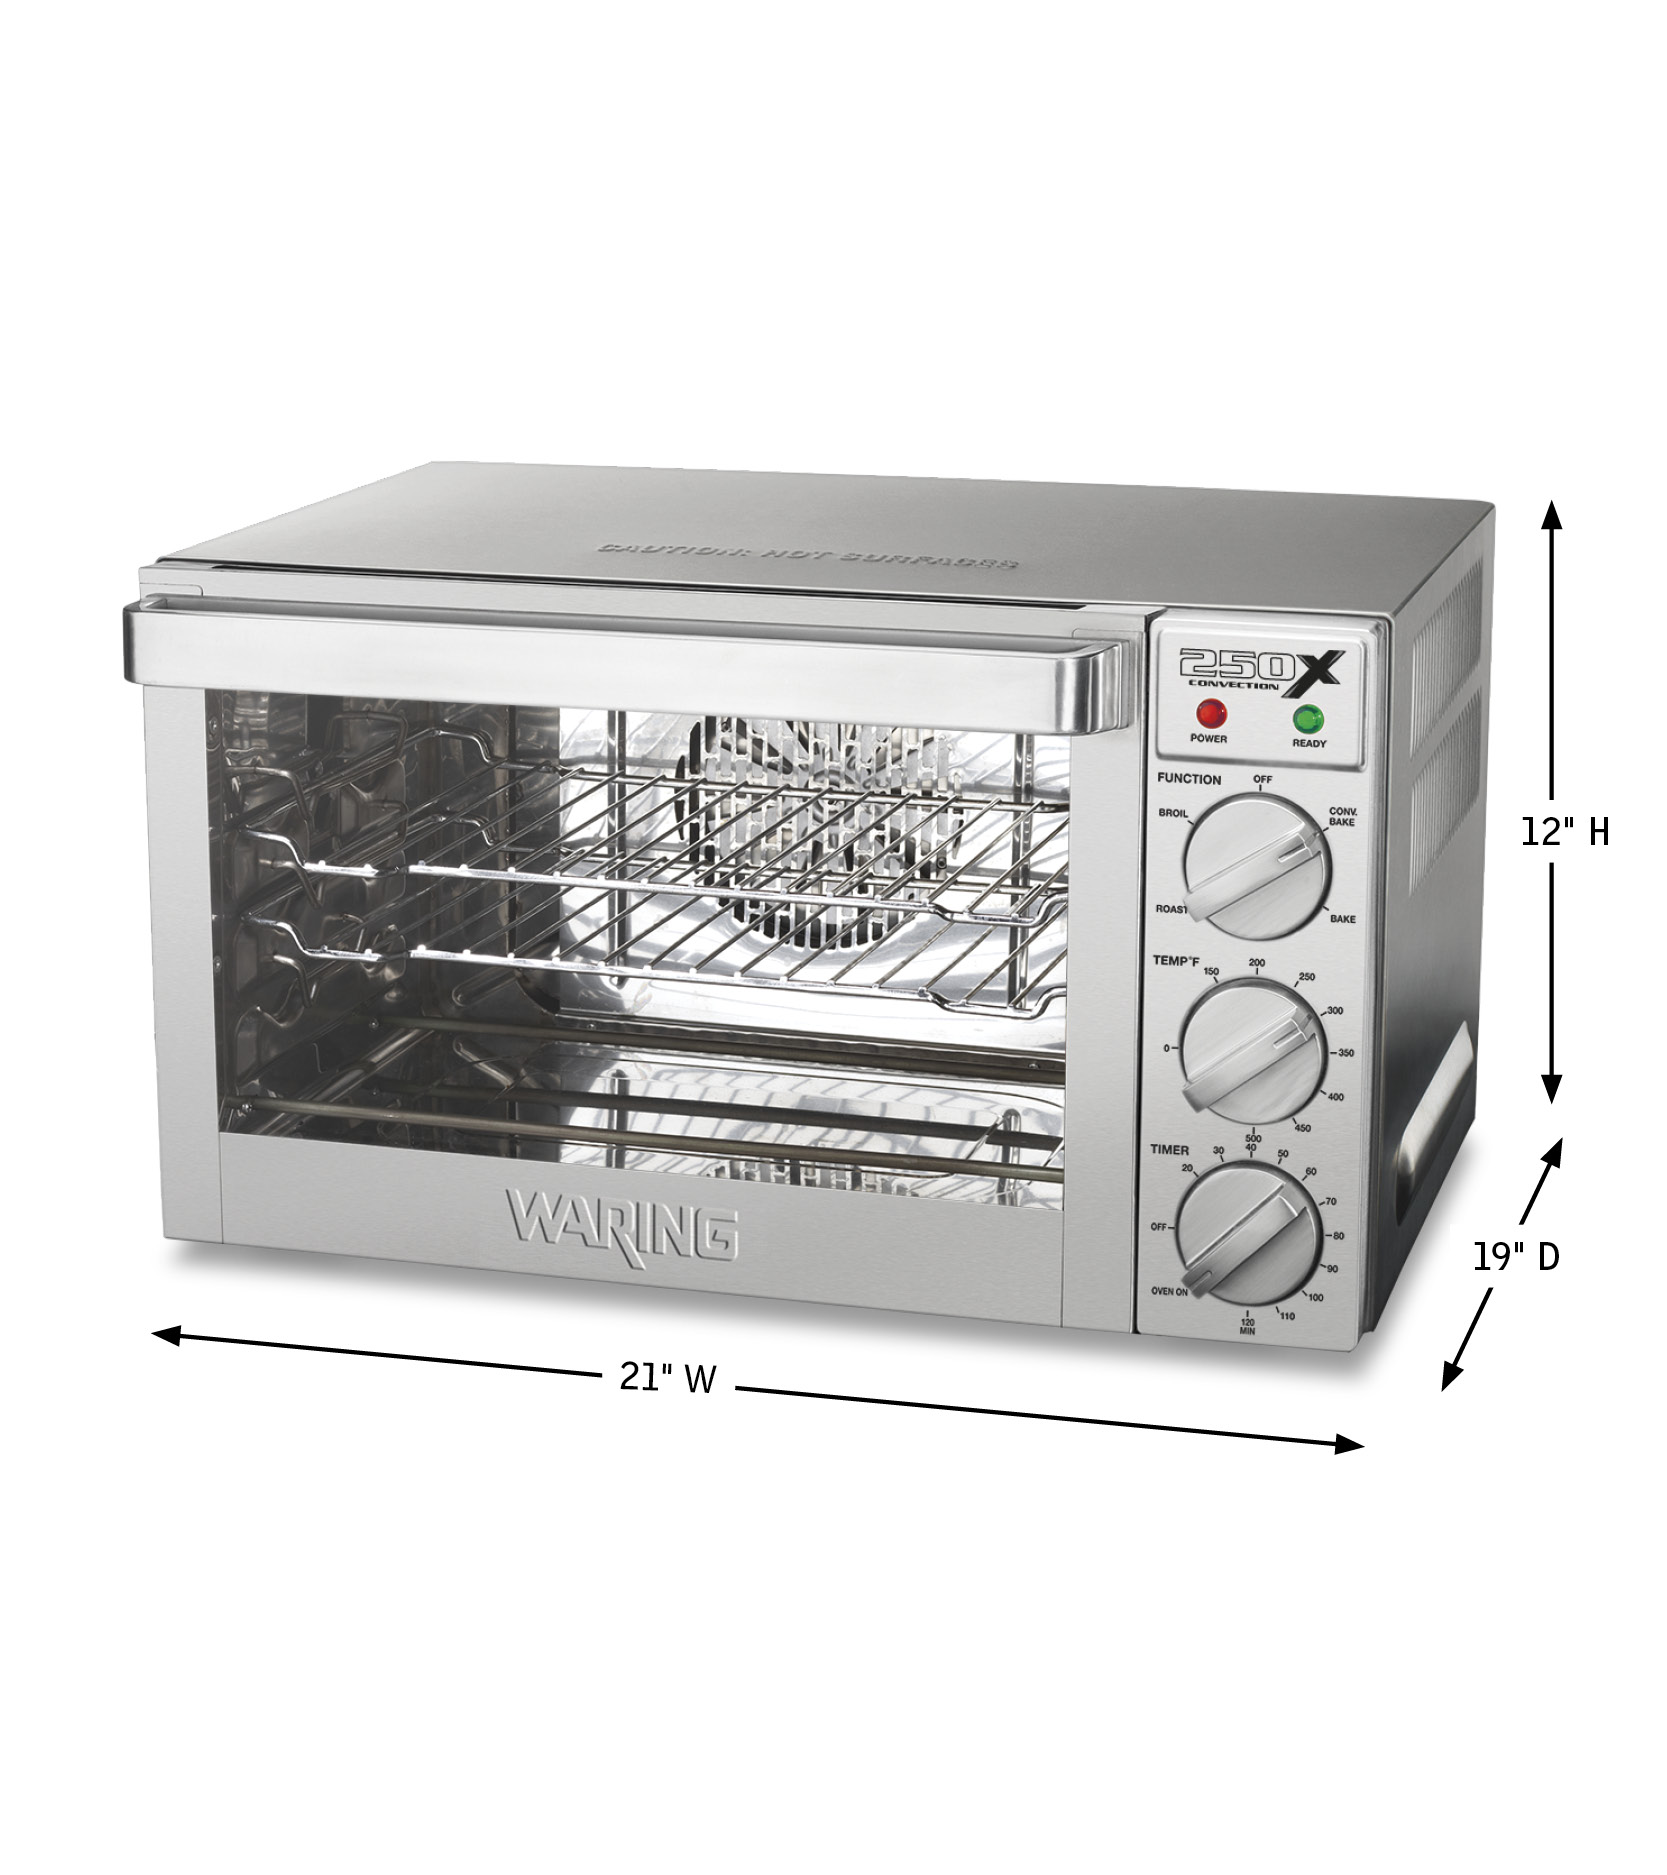 Baking Rack Oven Safe Wire Racks Fit Quarter Sheet Pan - China Baking Tray  and Stainless Steel Roasting Pan price